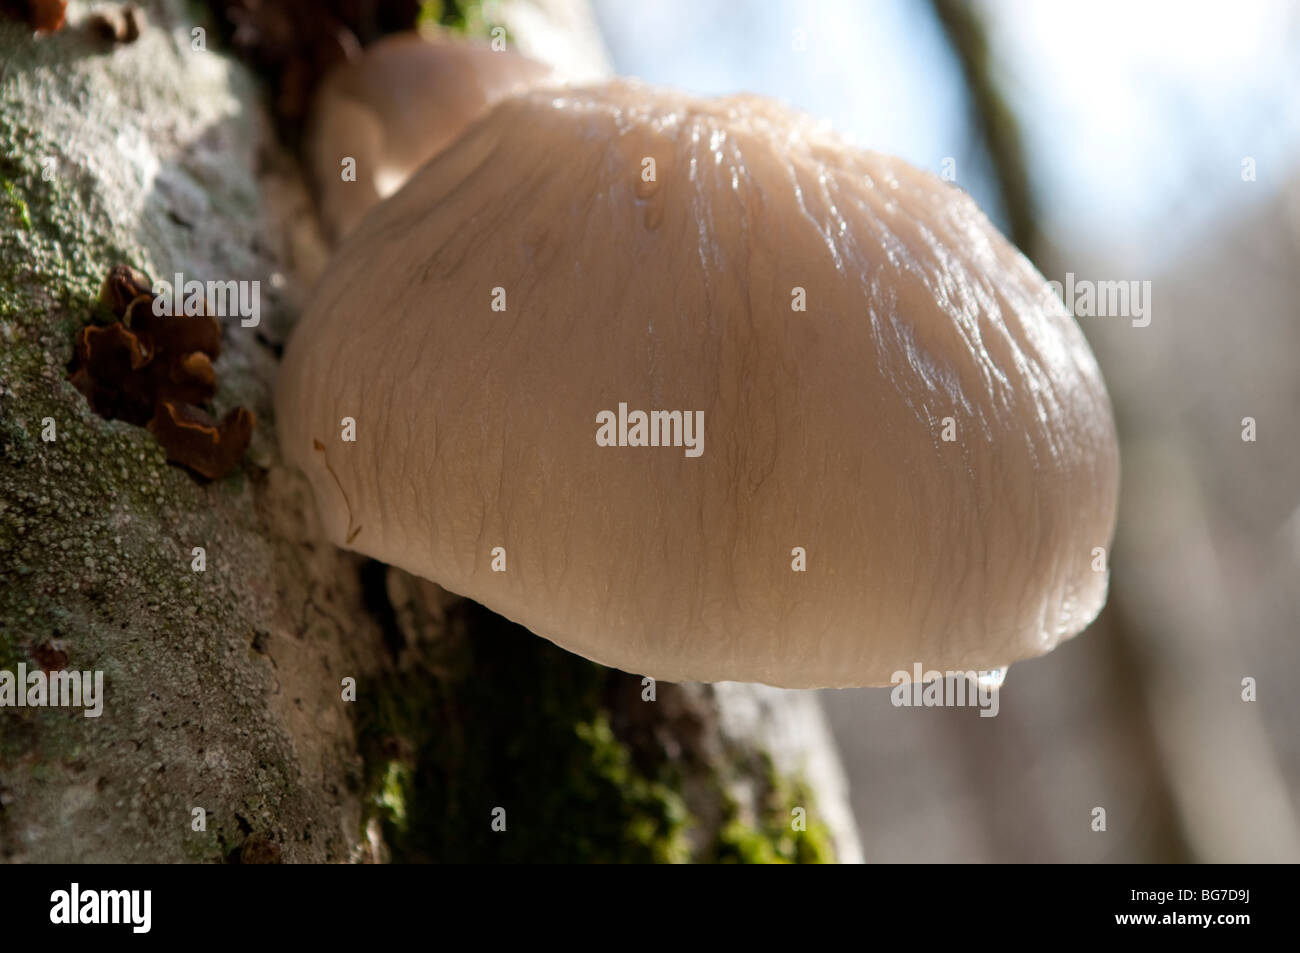 Wild mushroom growing on a tree, Cevennes, France Stock Photo